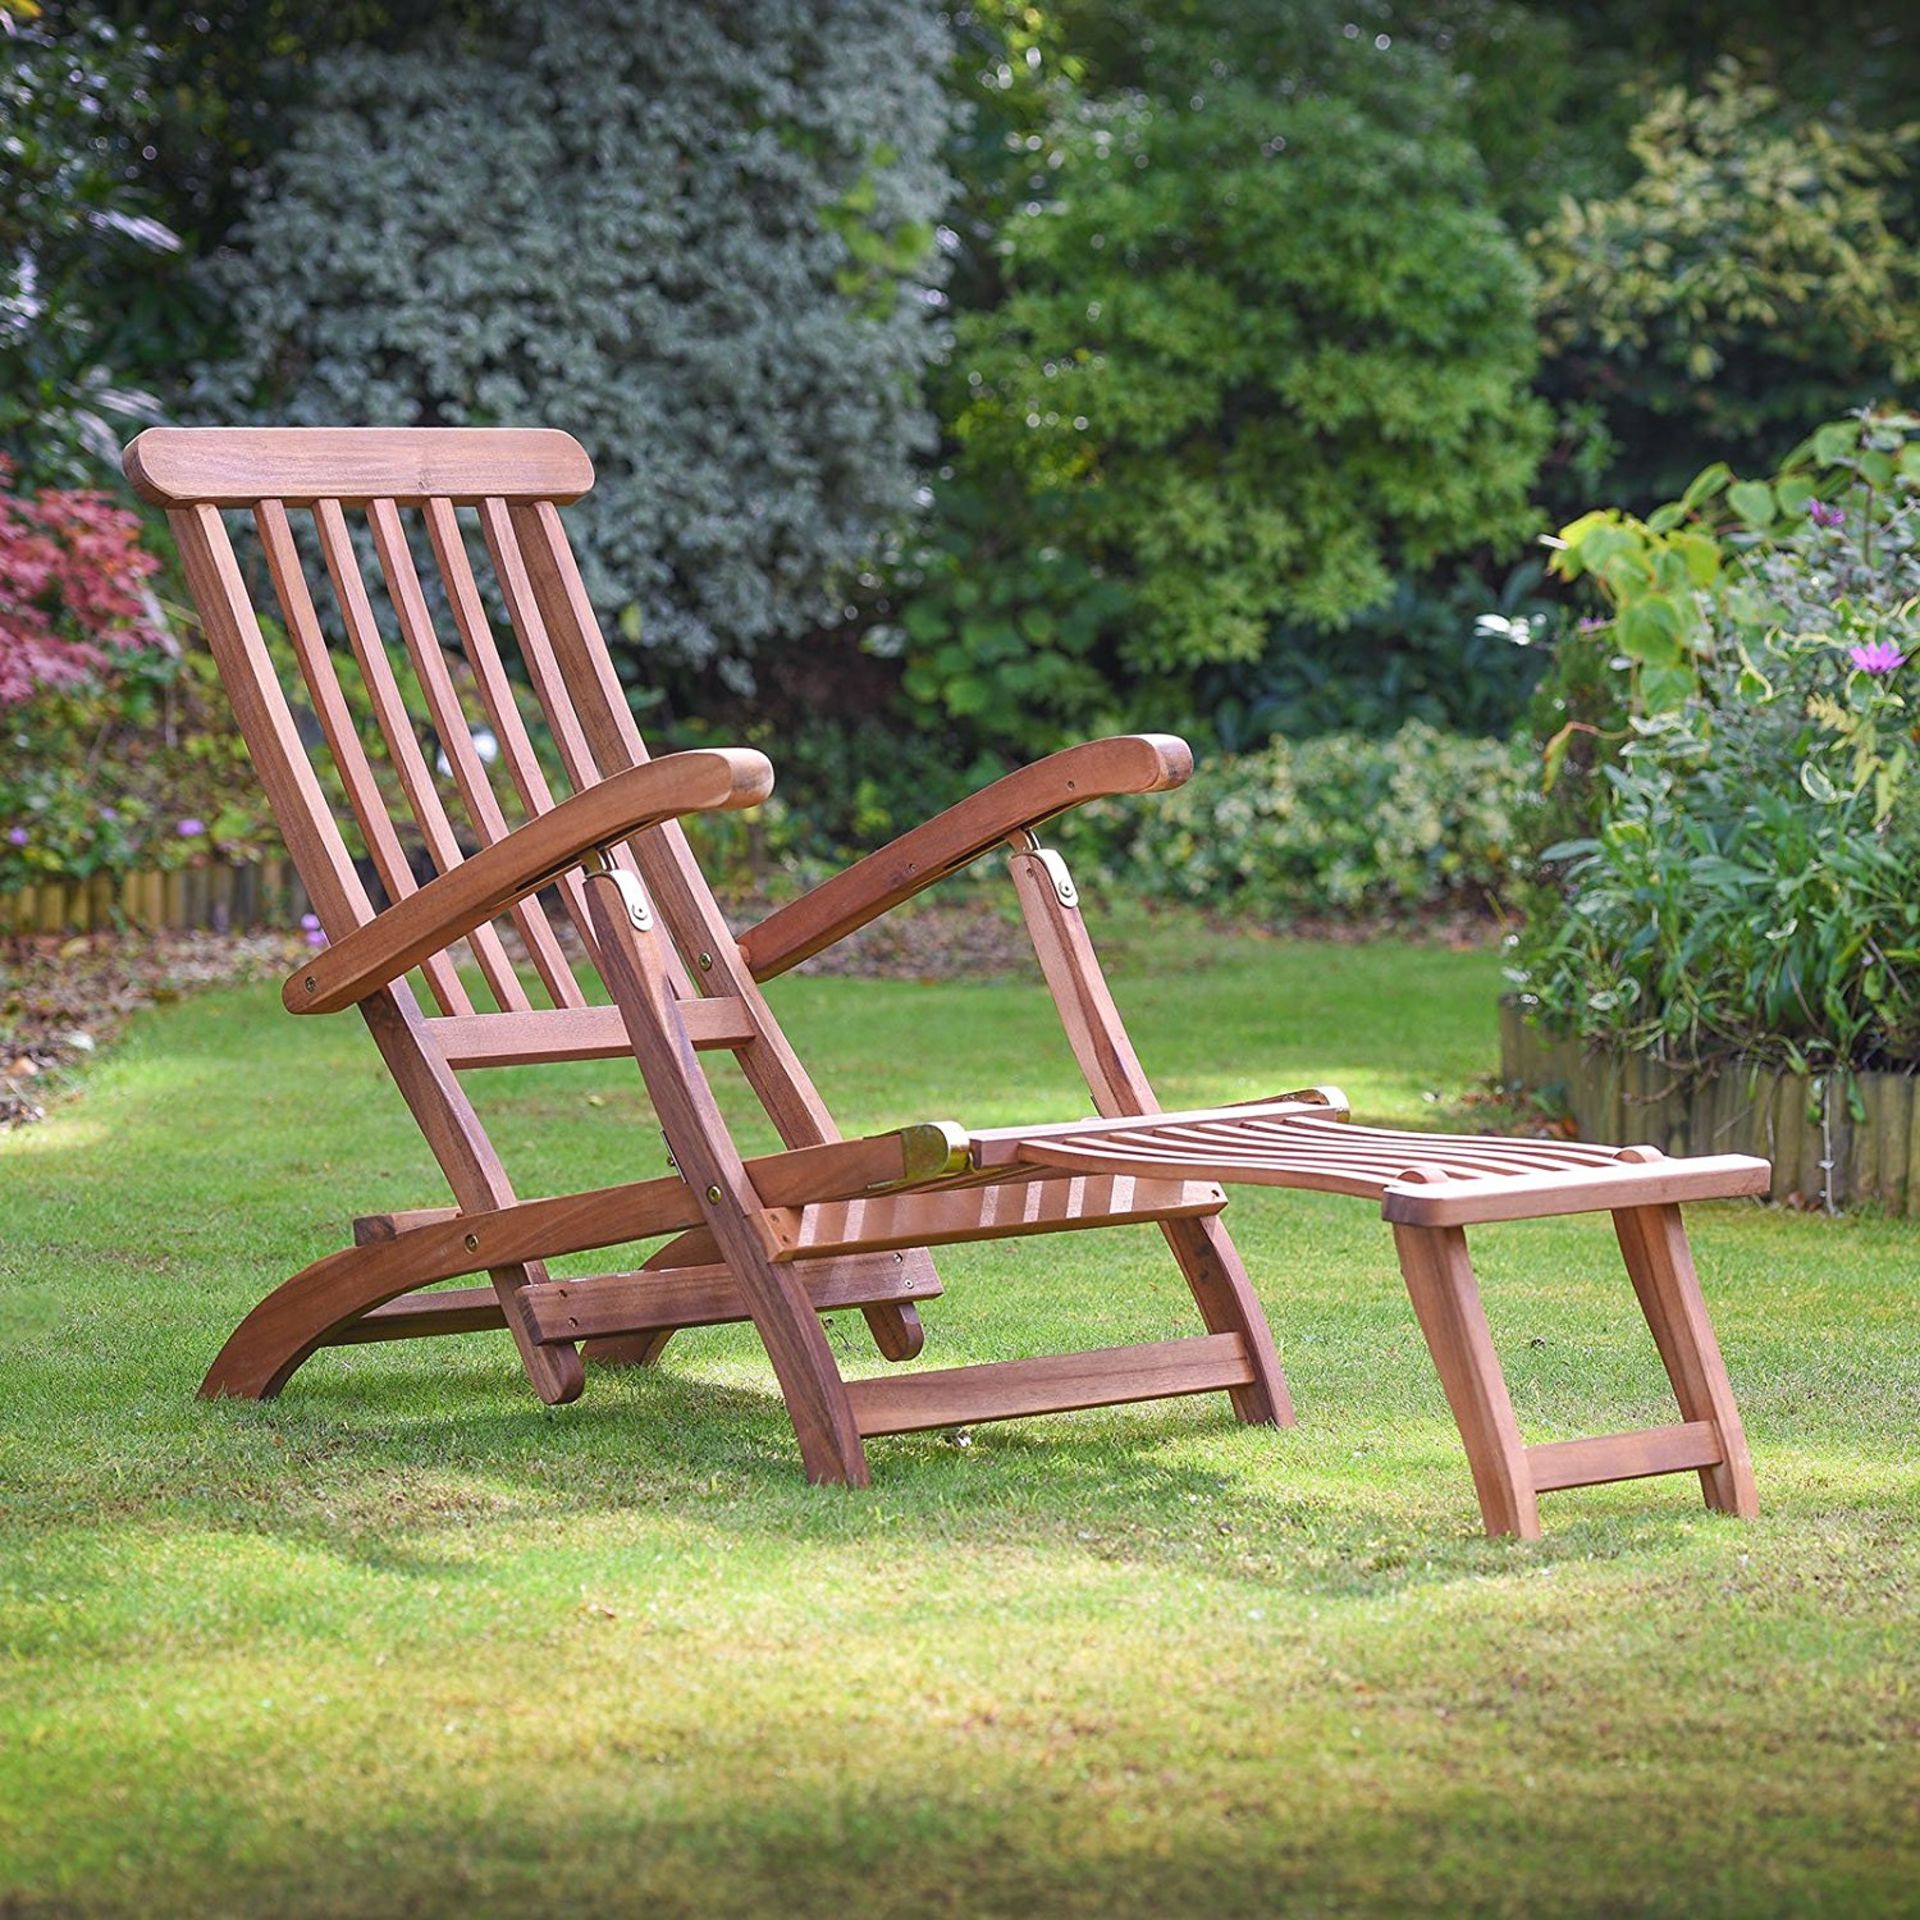 V Brand New Hardwood Steamer Chair (either Eucalyptus or Acacia Wood) - RRP £179.99 - Amazon £99.